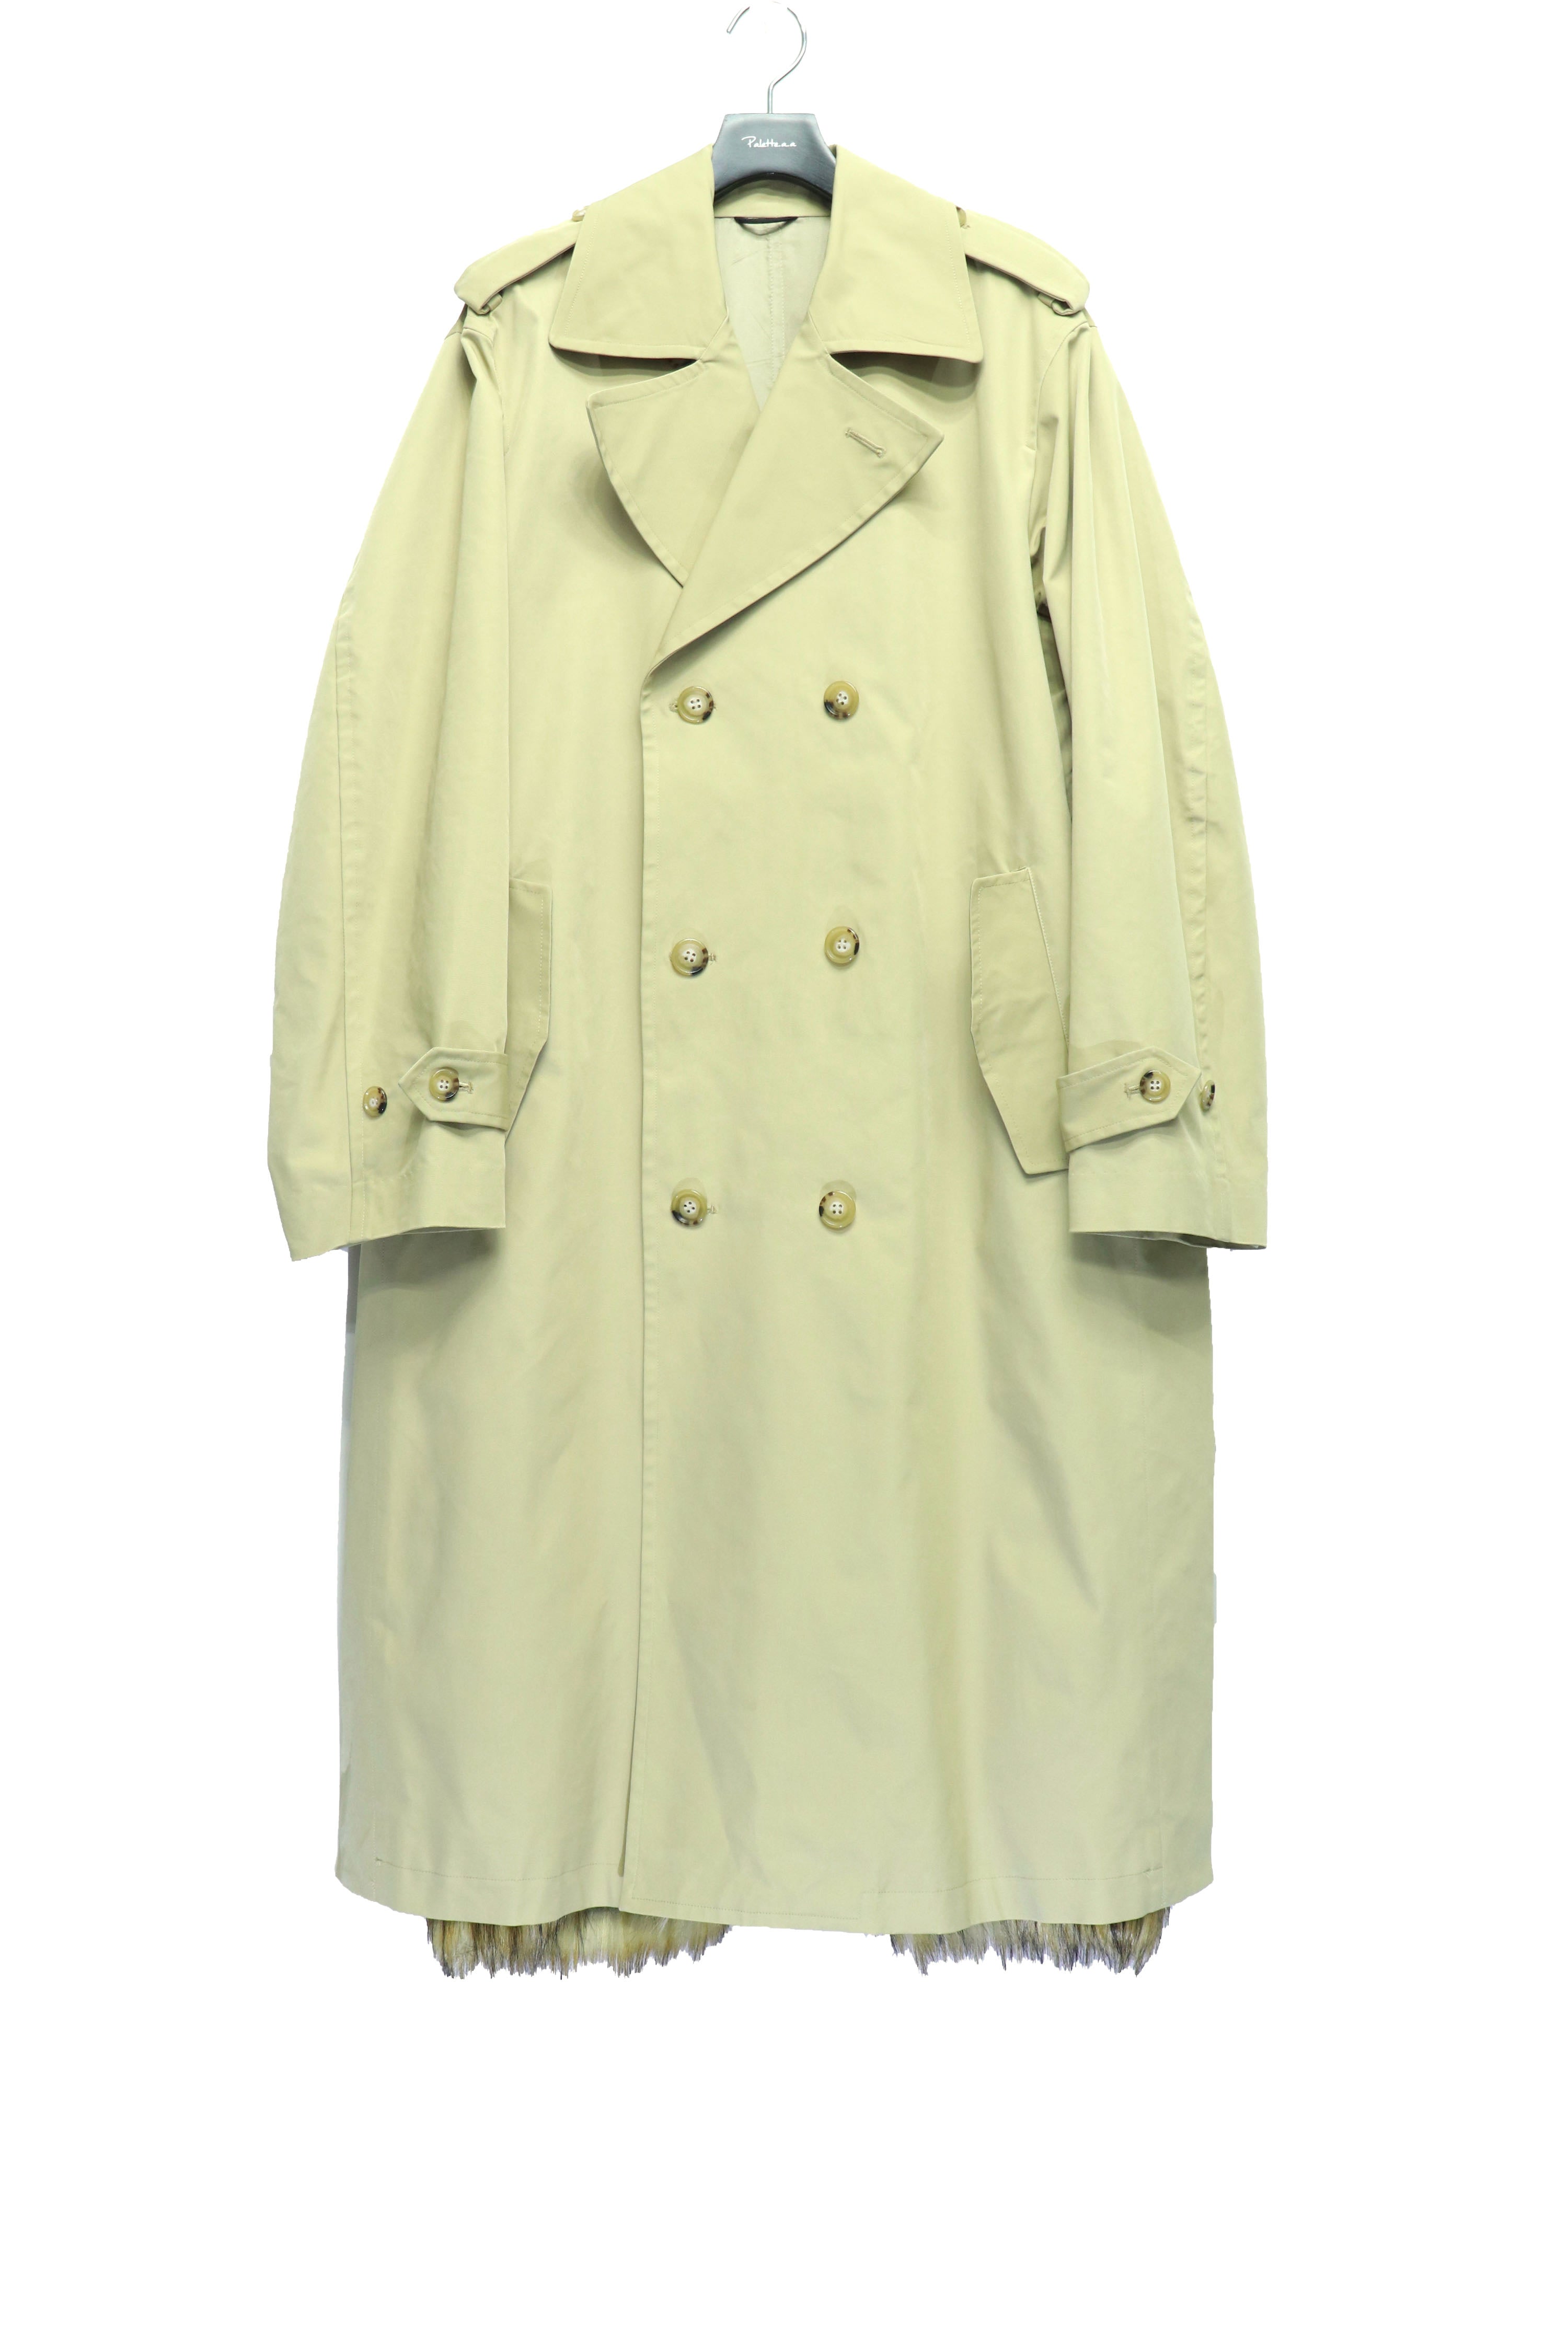 TOGA VIRILIS(トーガ ビリリース)のTrench coat with fur BEIGEの通販 